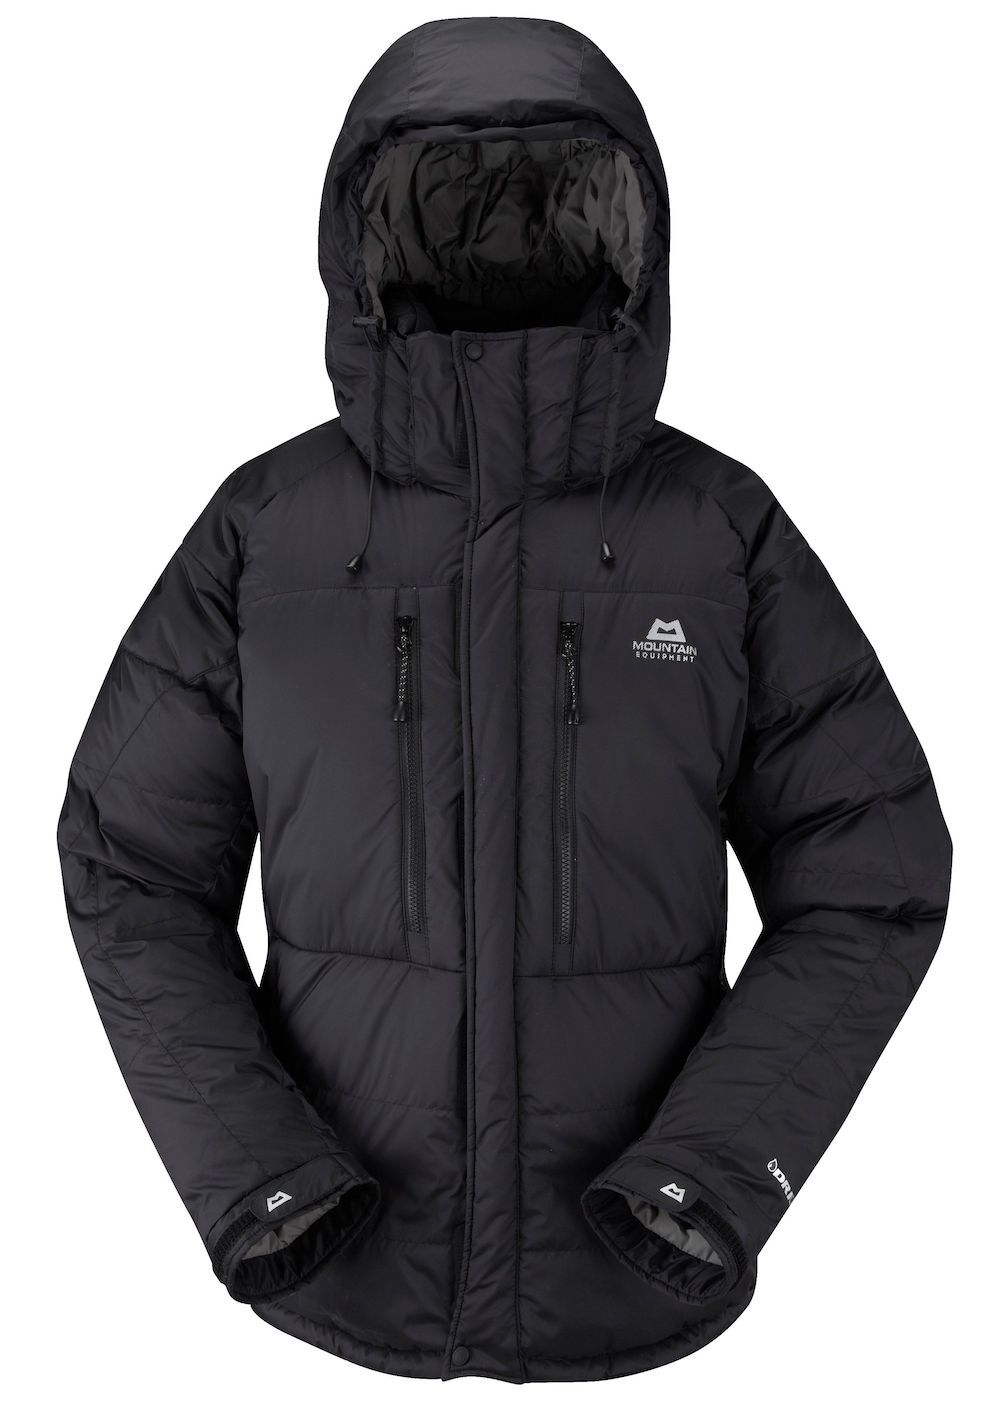 Mountain Equipment Annapurna Jacket - Down jacket - Men's